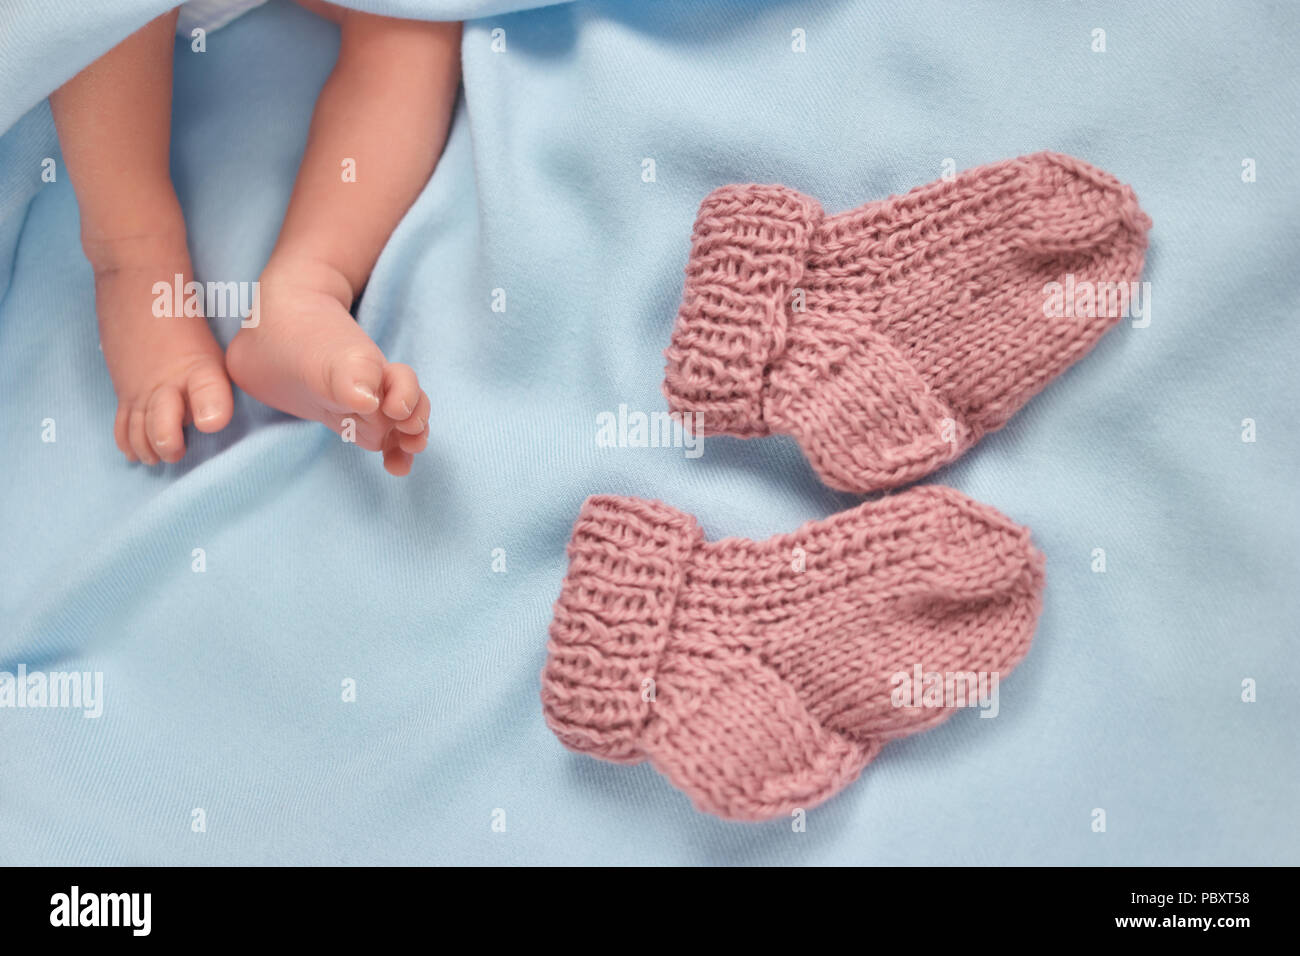 Tiny newborn baby feet and warm wool socks. Pair of knitted socks. Blue blanket. Stock Photo